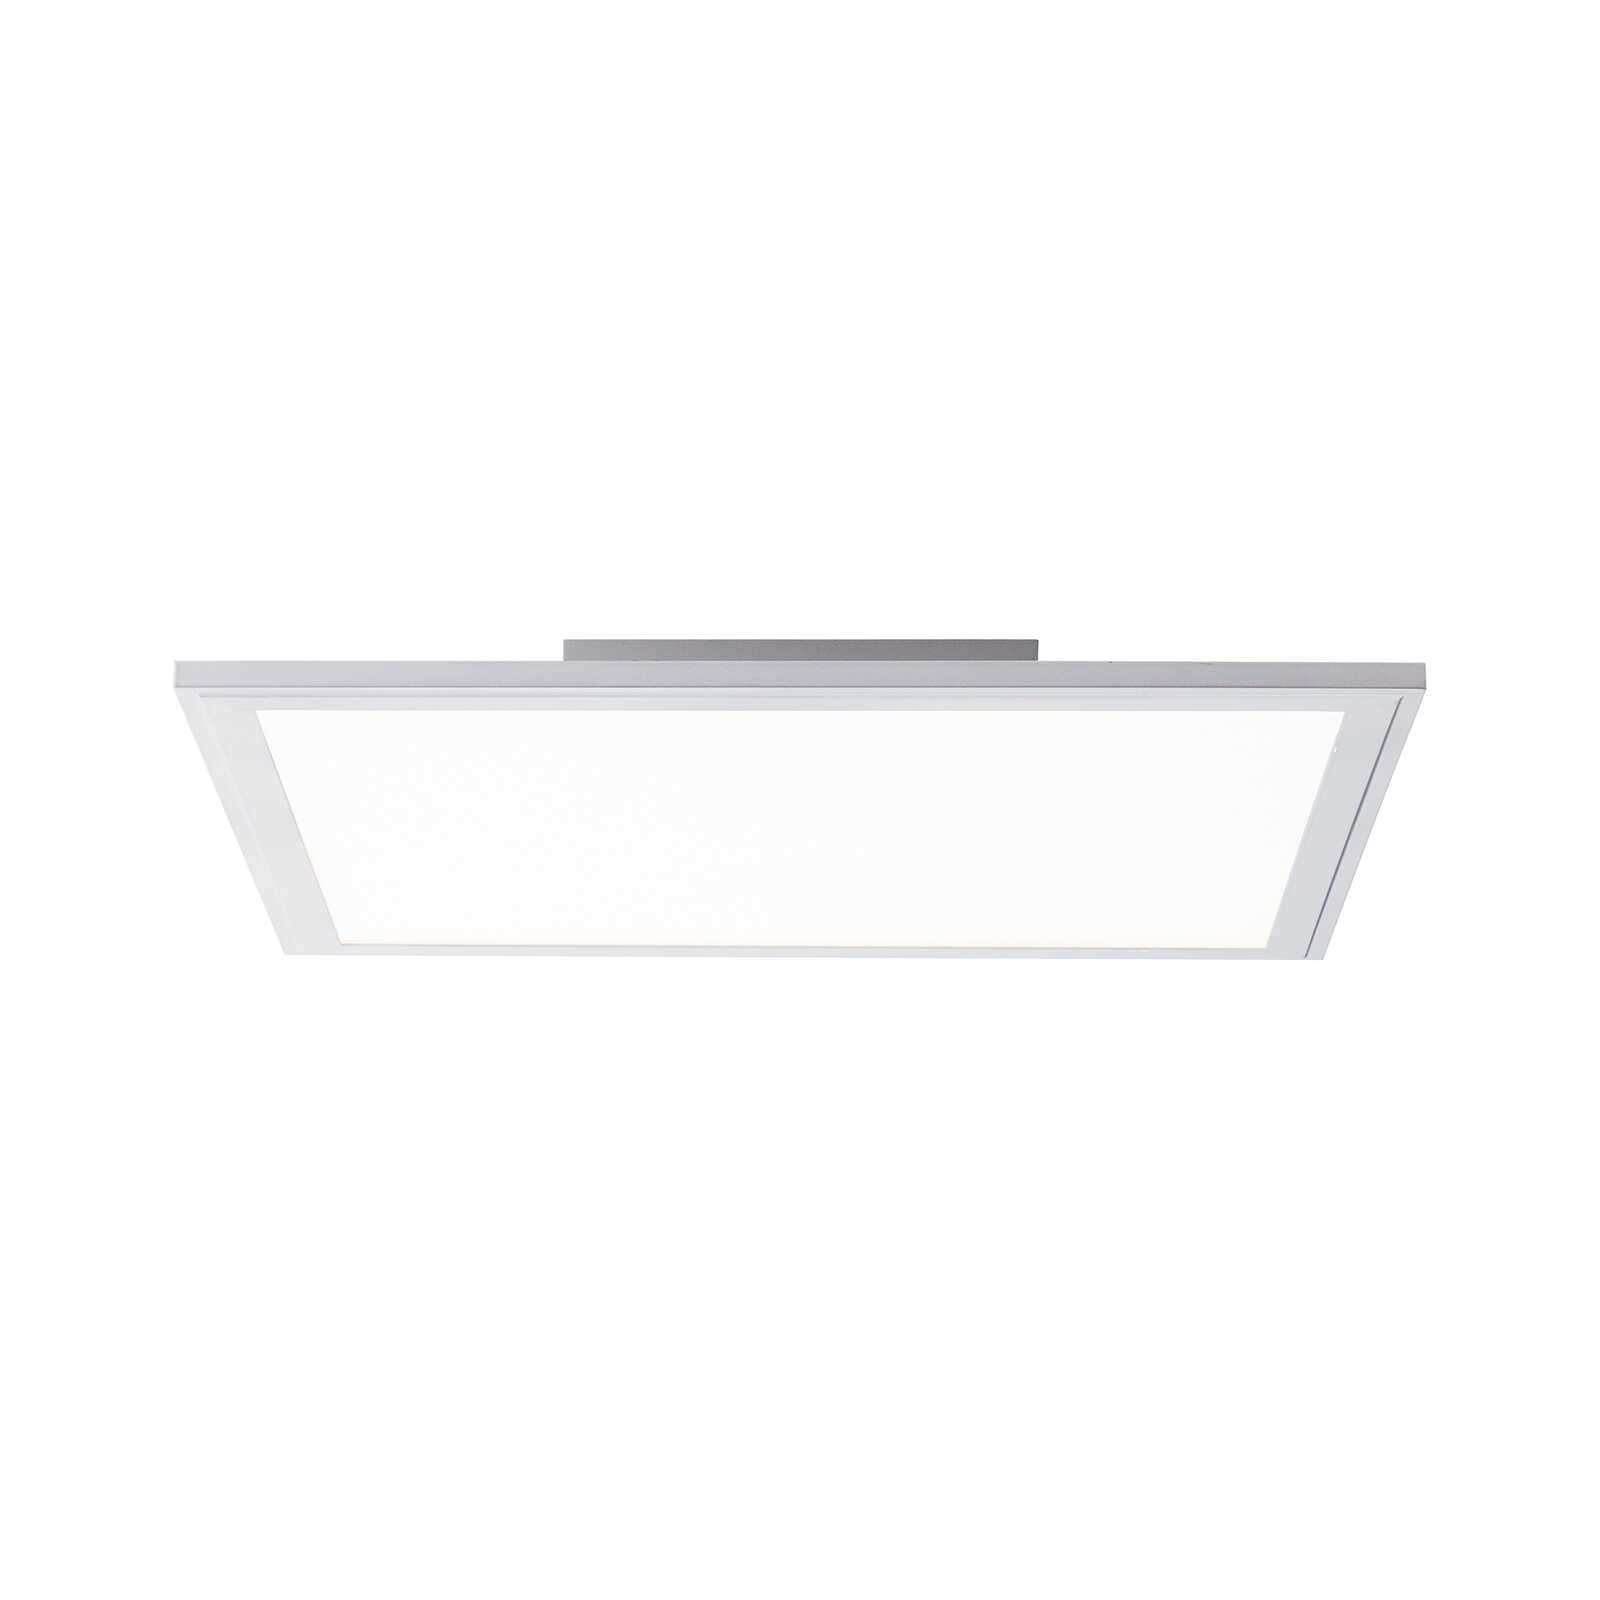 Plastic ceiling light - Gloria 1 - Silver
